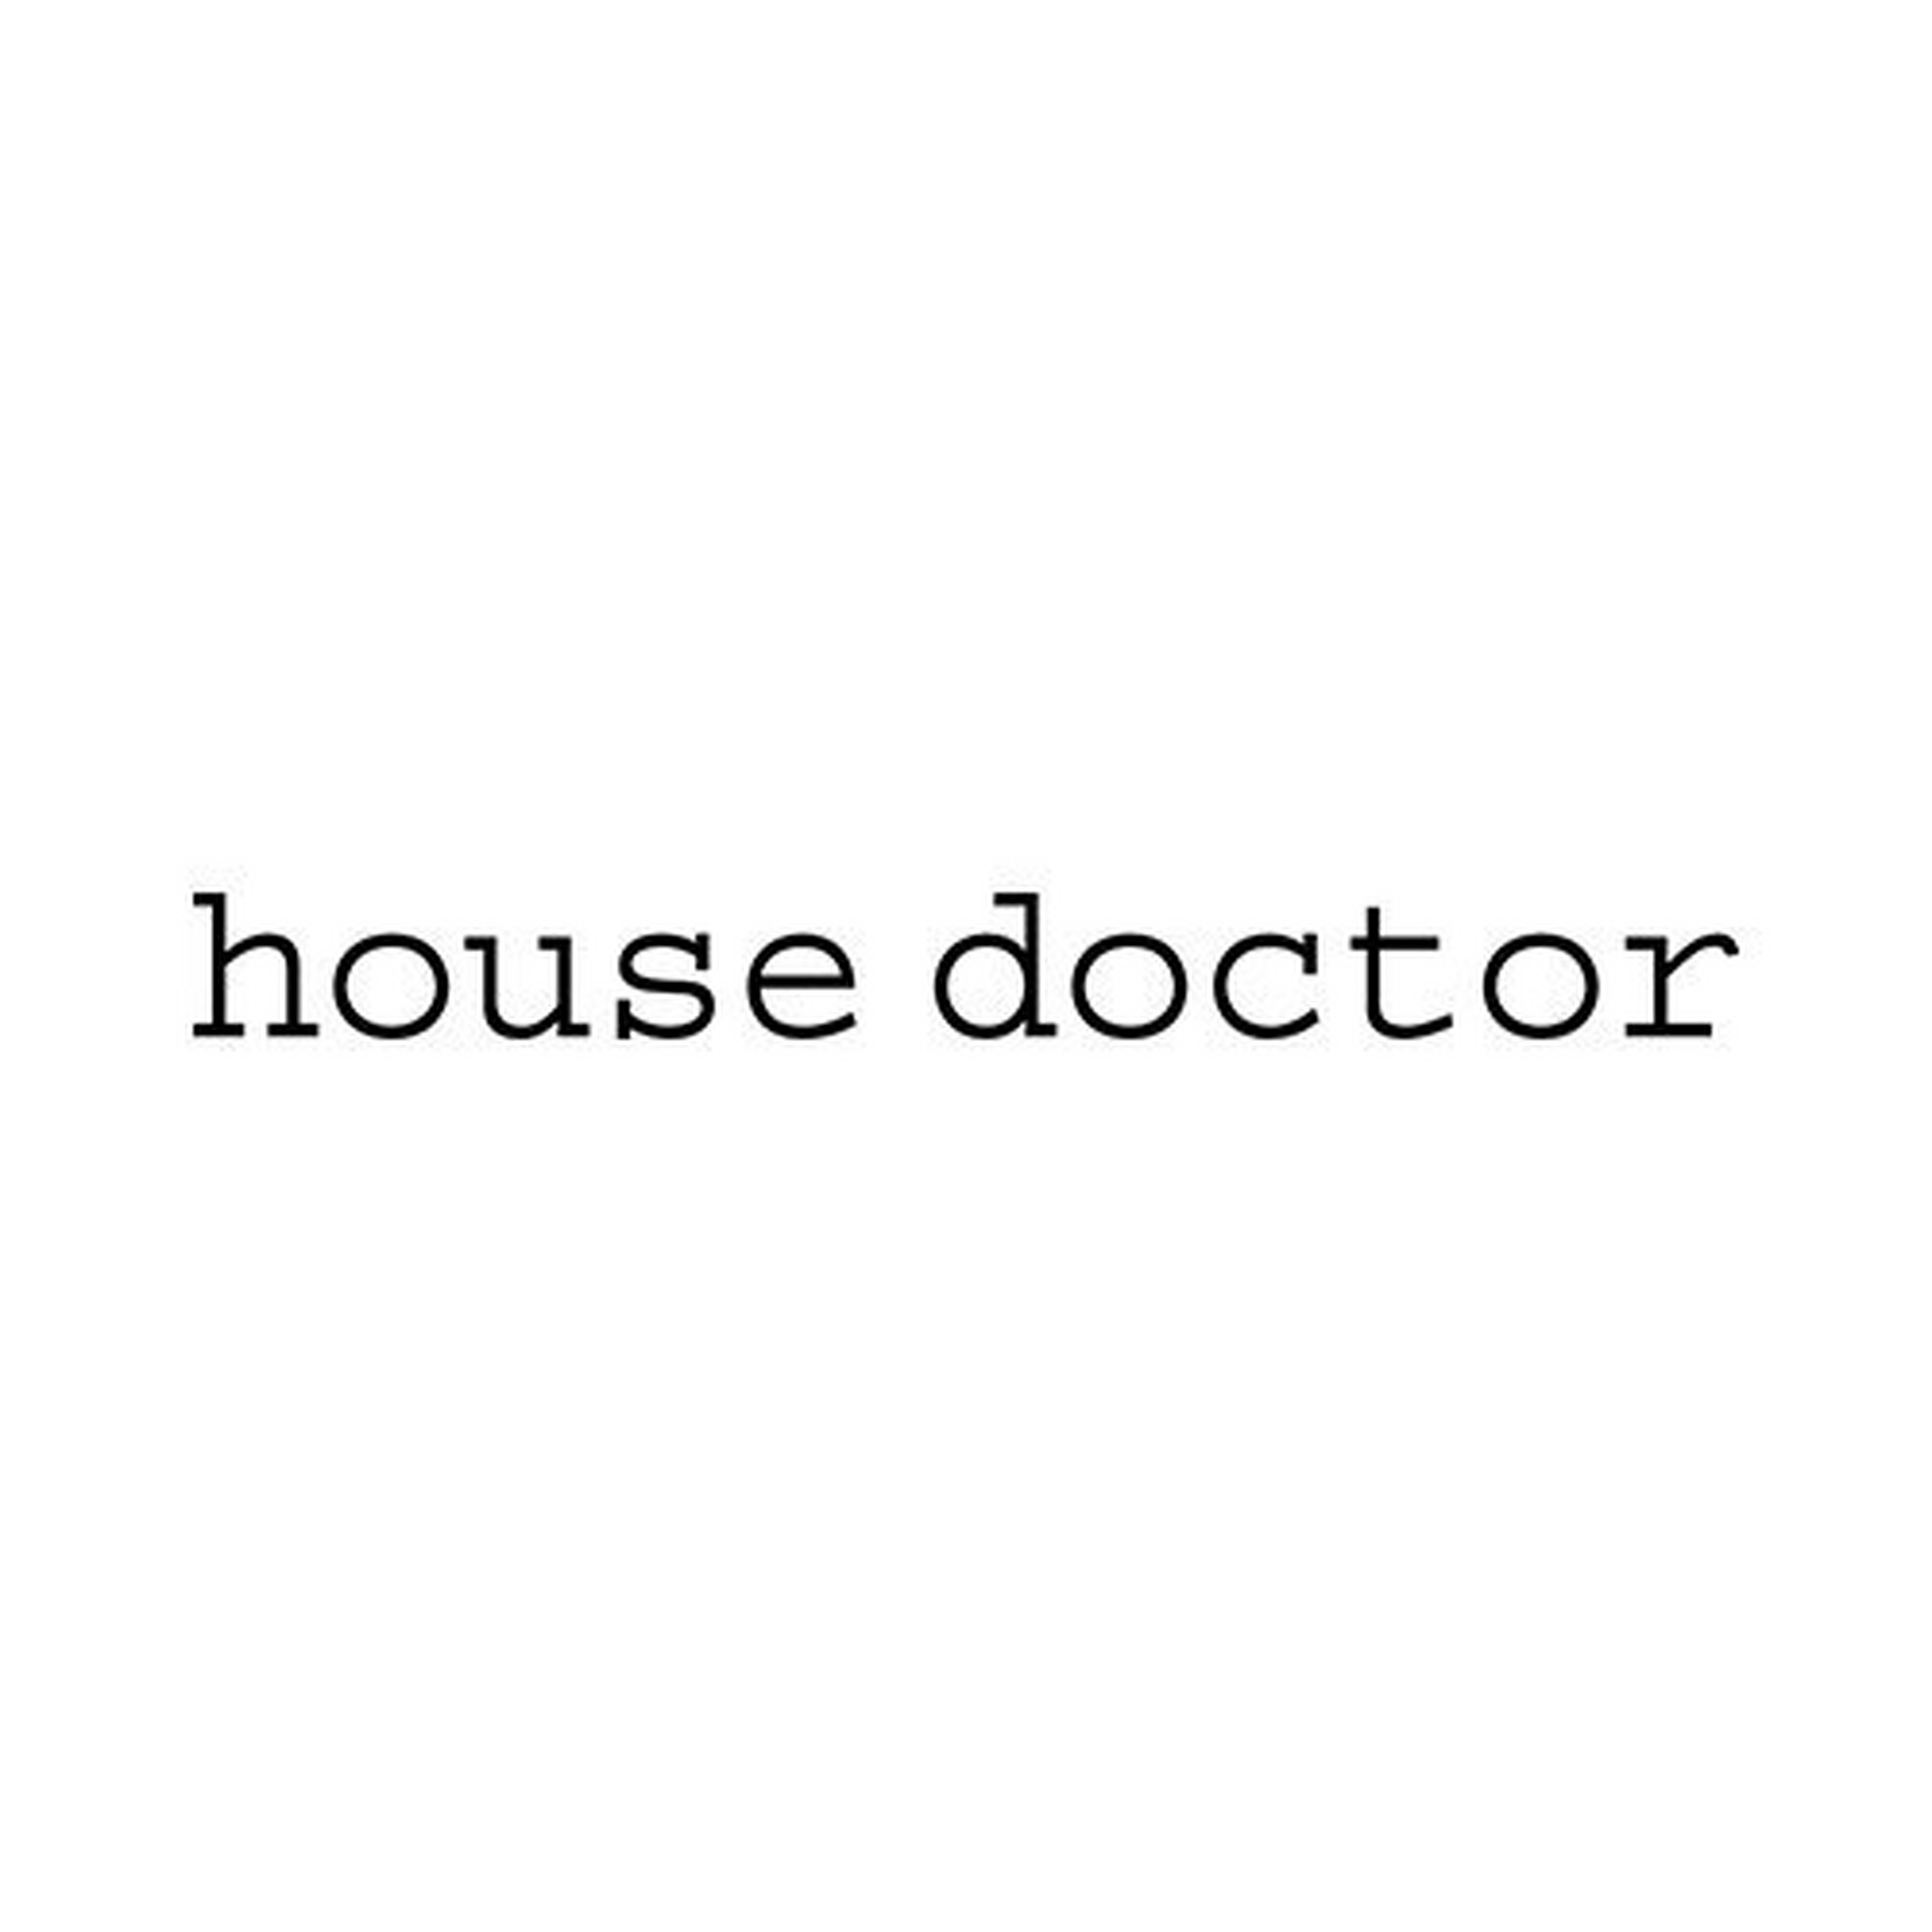 House Doctor logotype